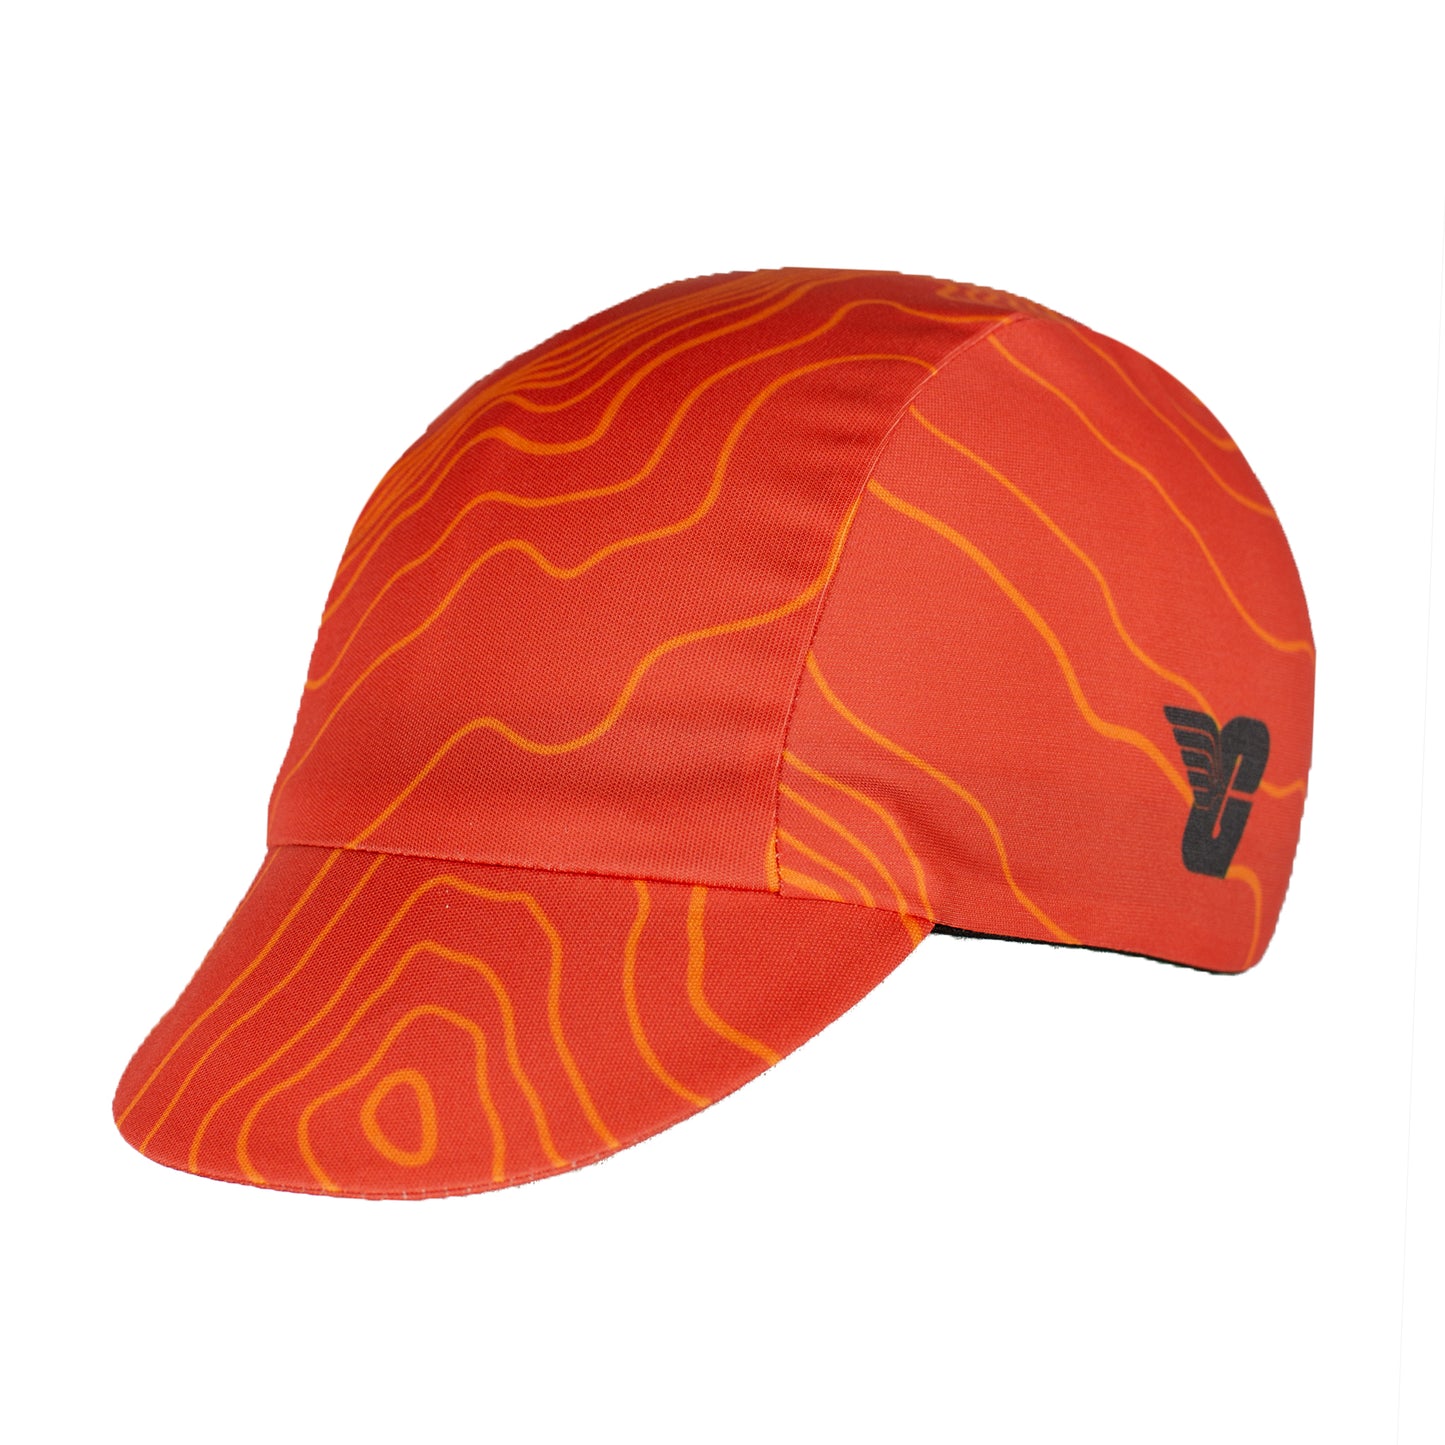 GW Terrain Cycling cap (Orange)